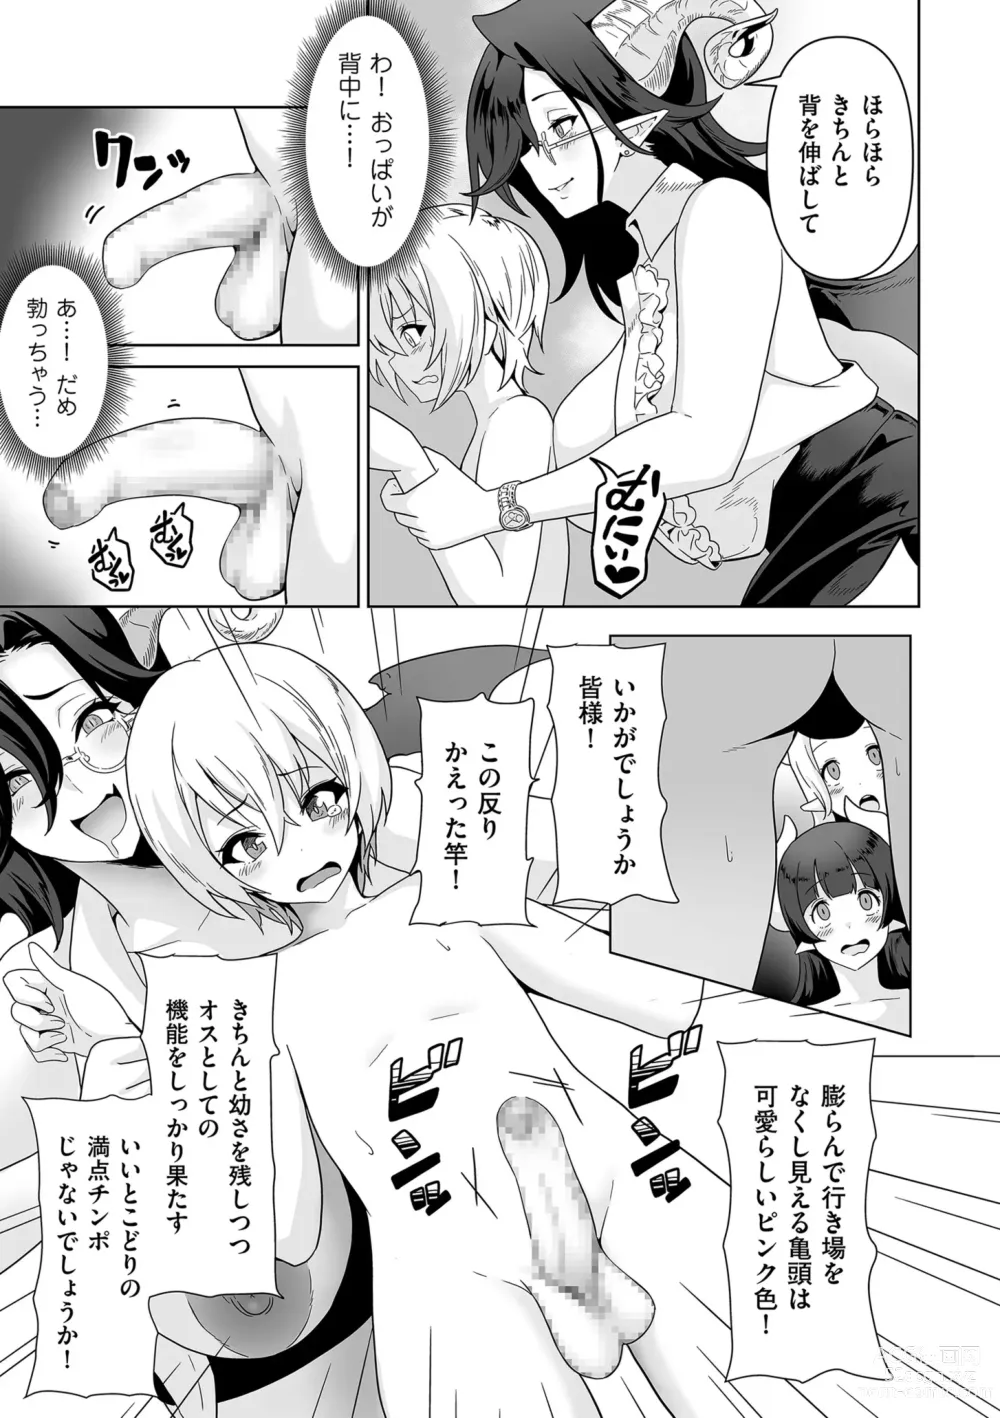 Page 13 of manga Succubus Kingdom